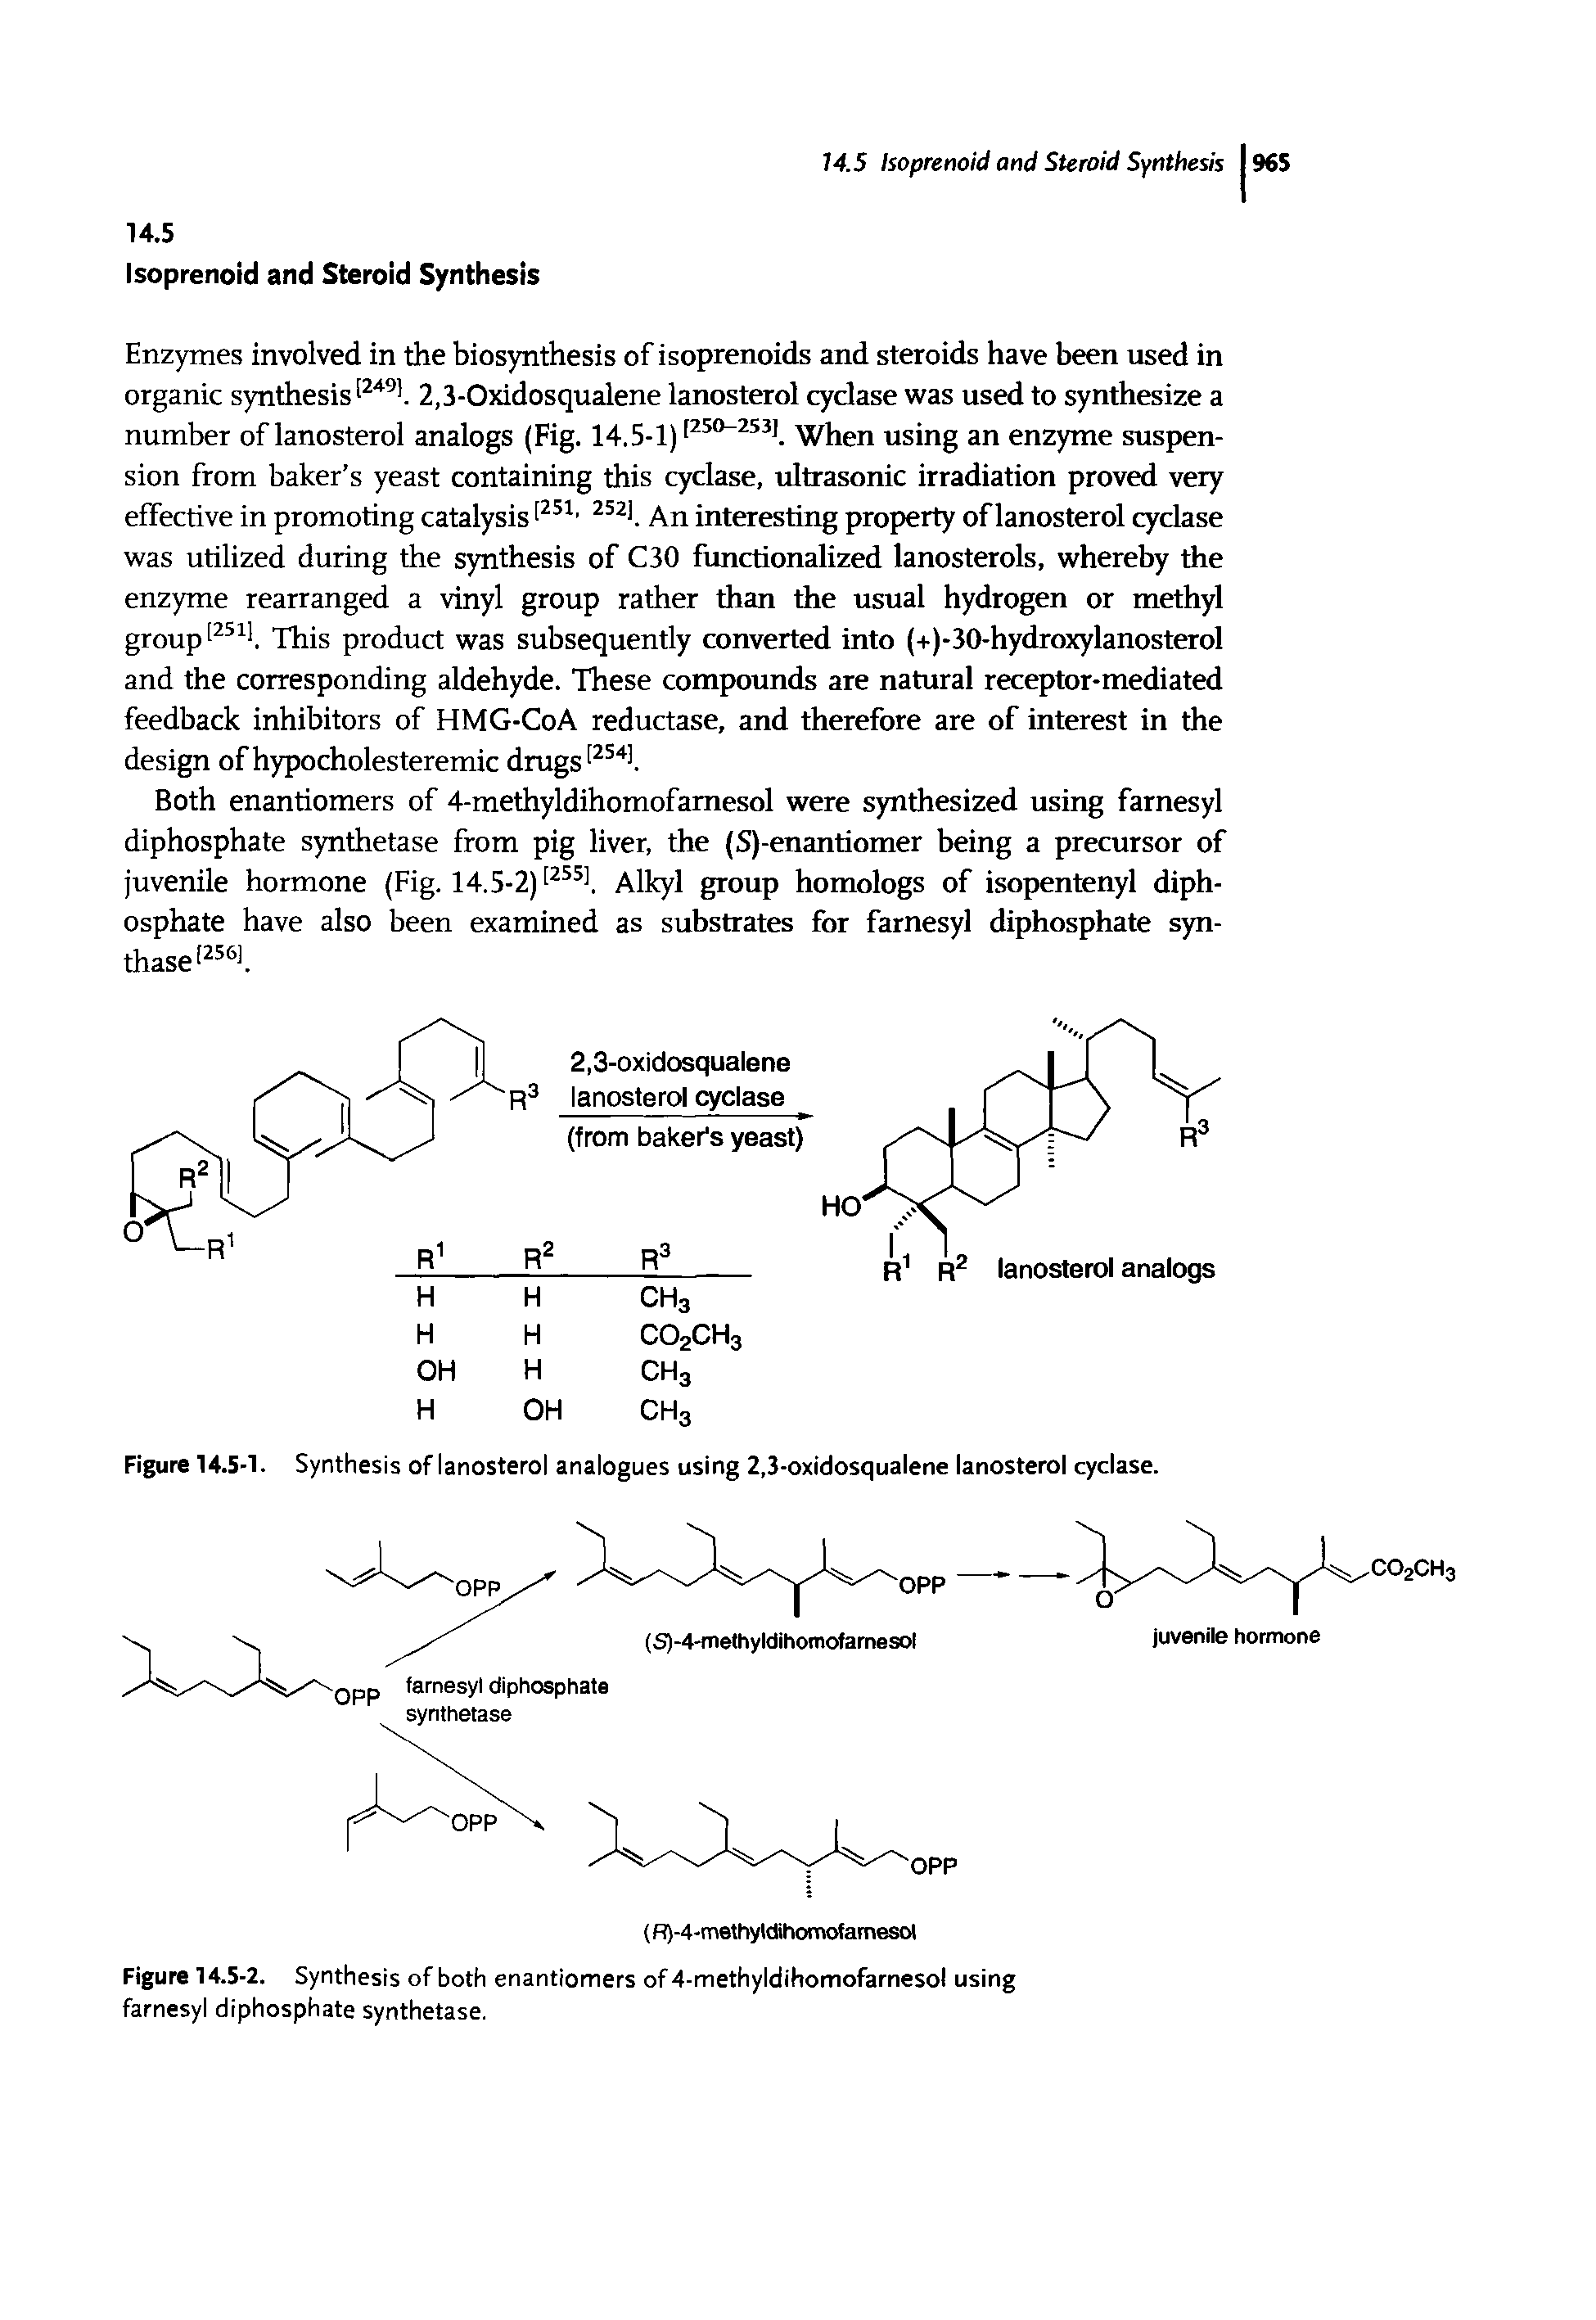 Figure 14.5-1. Synthesis of lanosterol analogues using 2,3-oxidosqualene lanosterol cyclase.